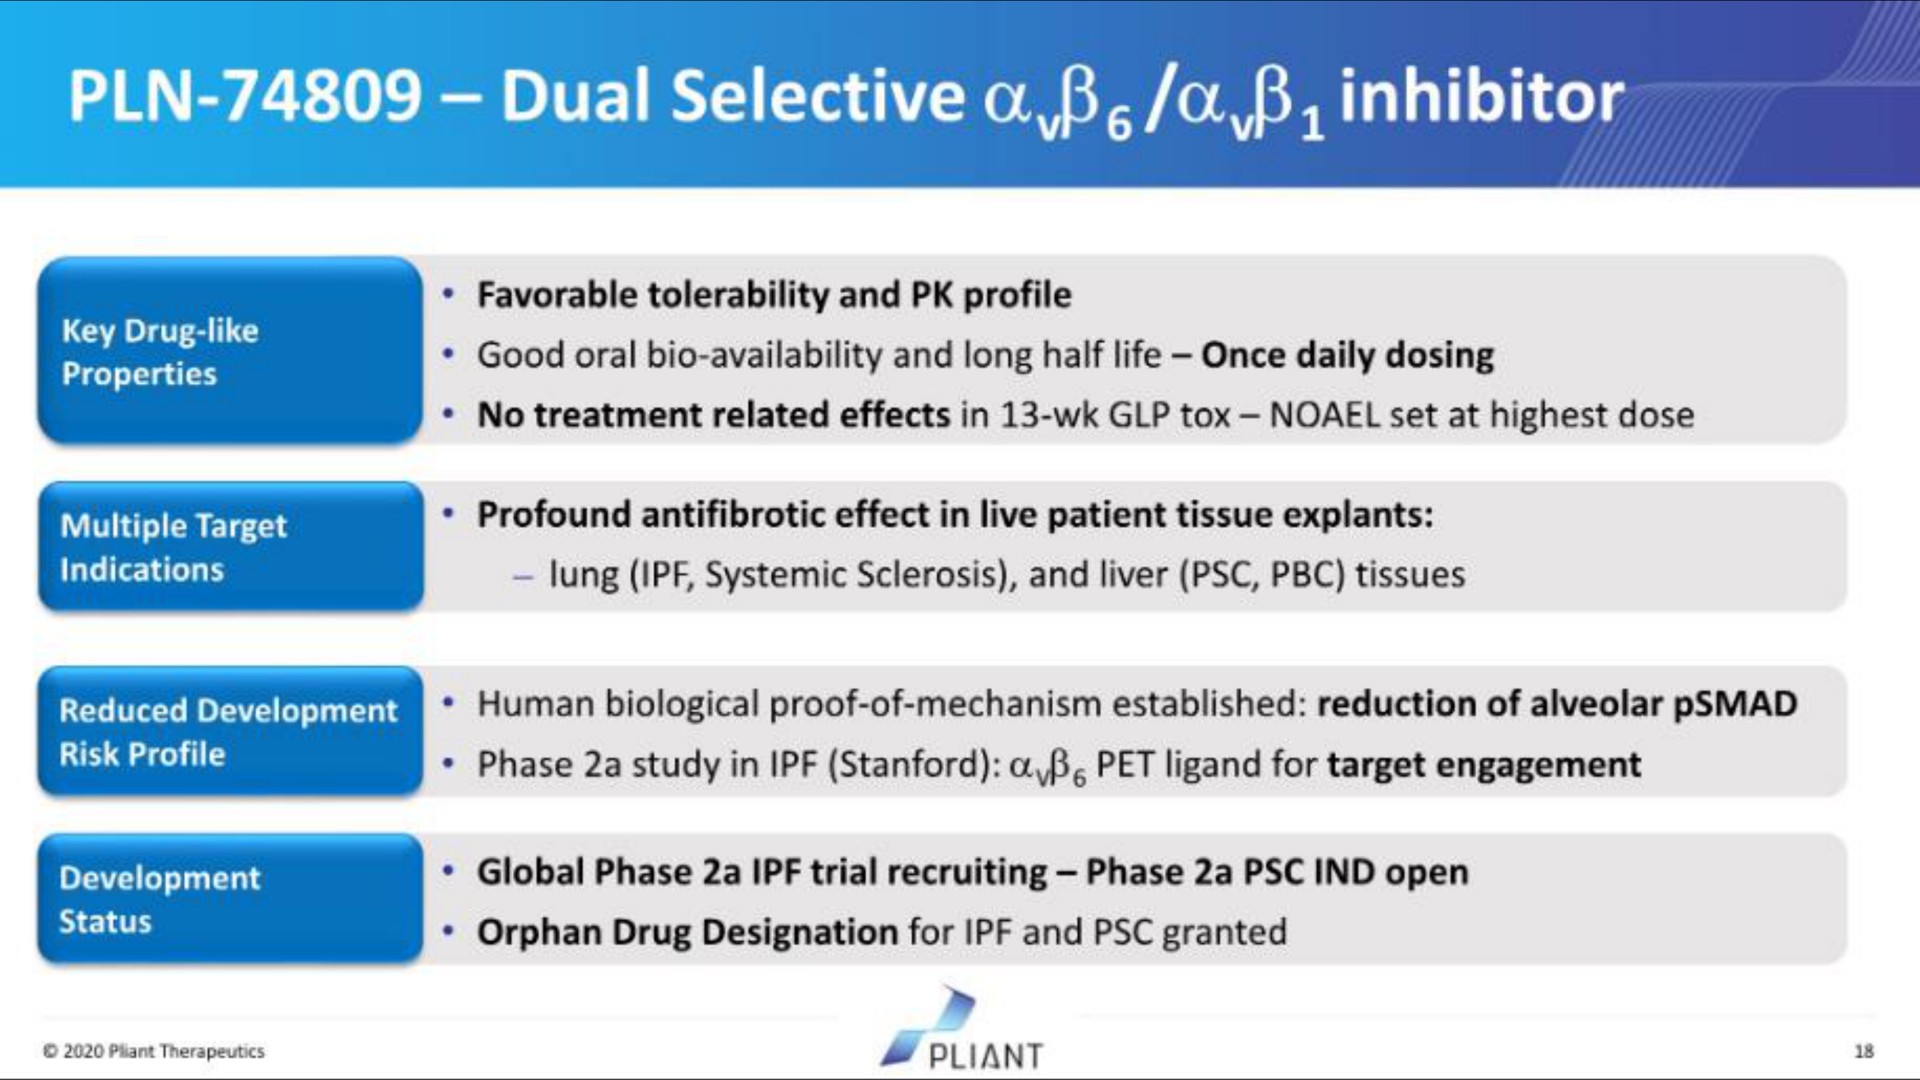 dual selective a a inhibitor | Pilant Therapeutics